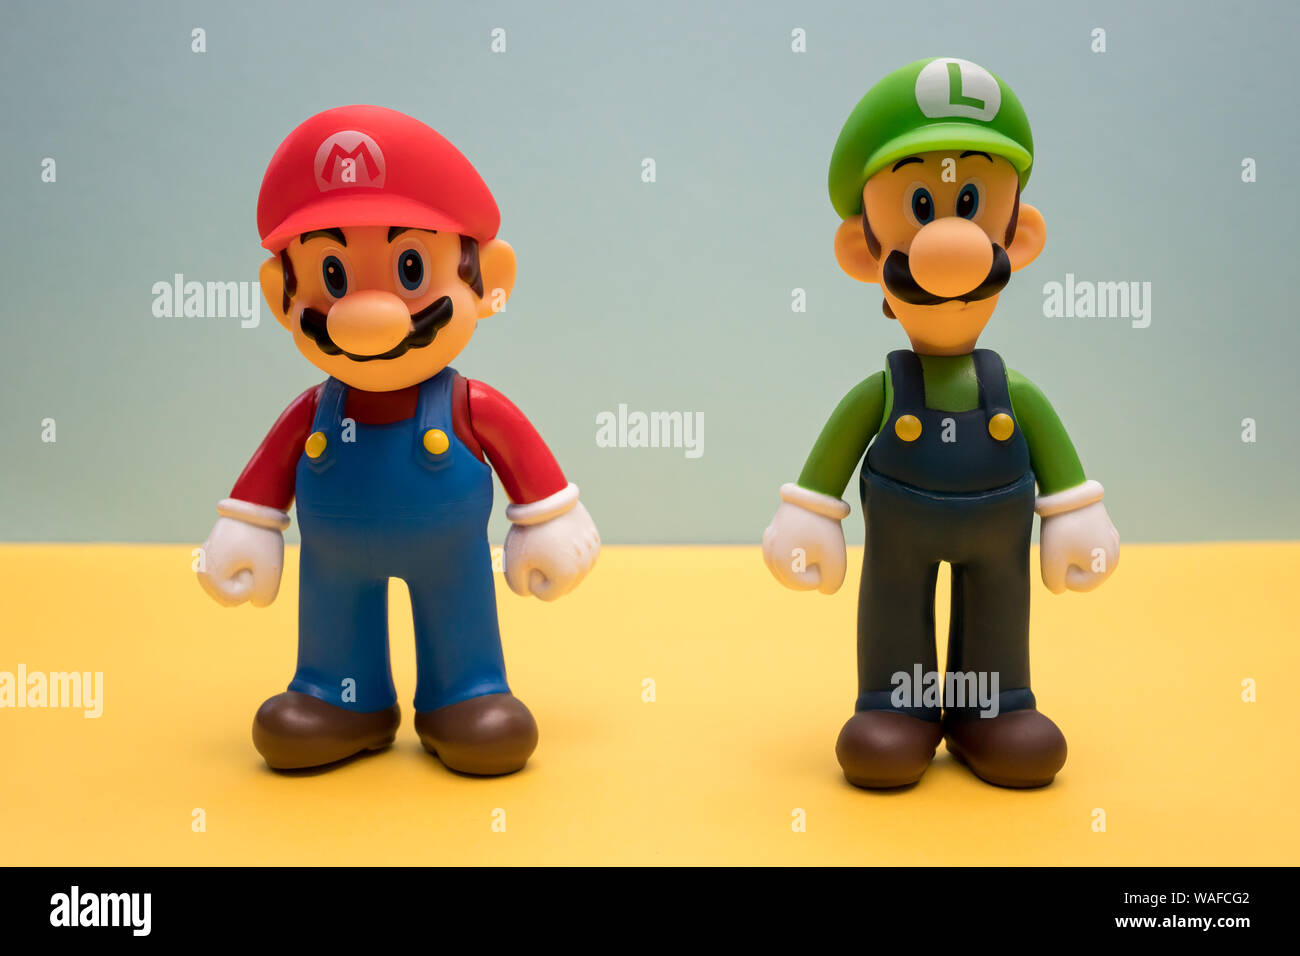 Mario luigi fotografías e imágenes de alta resolución - Alamy